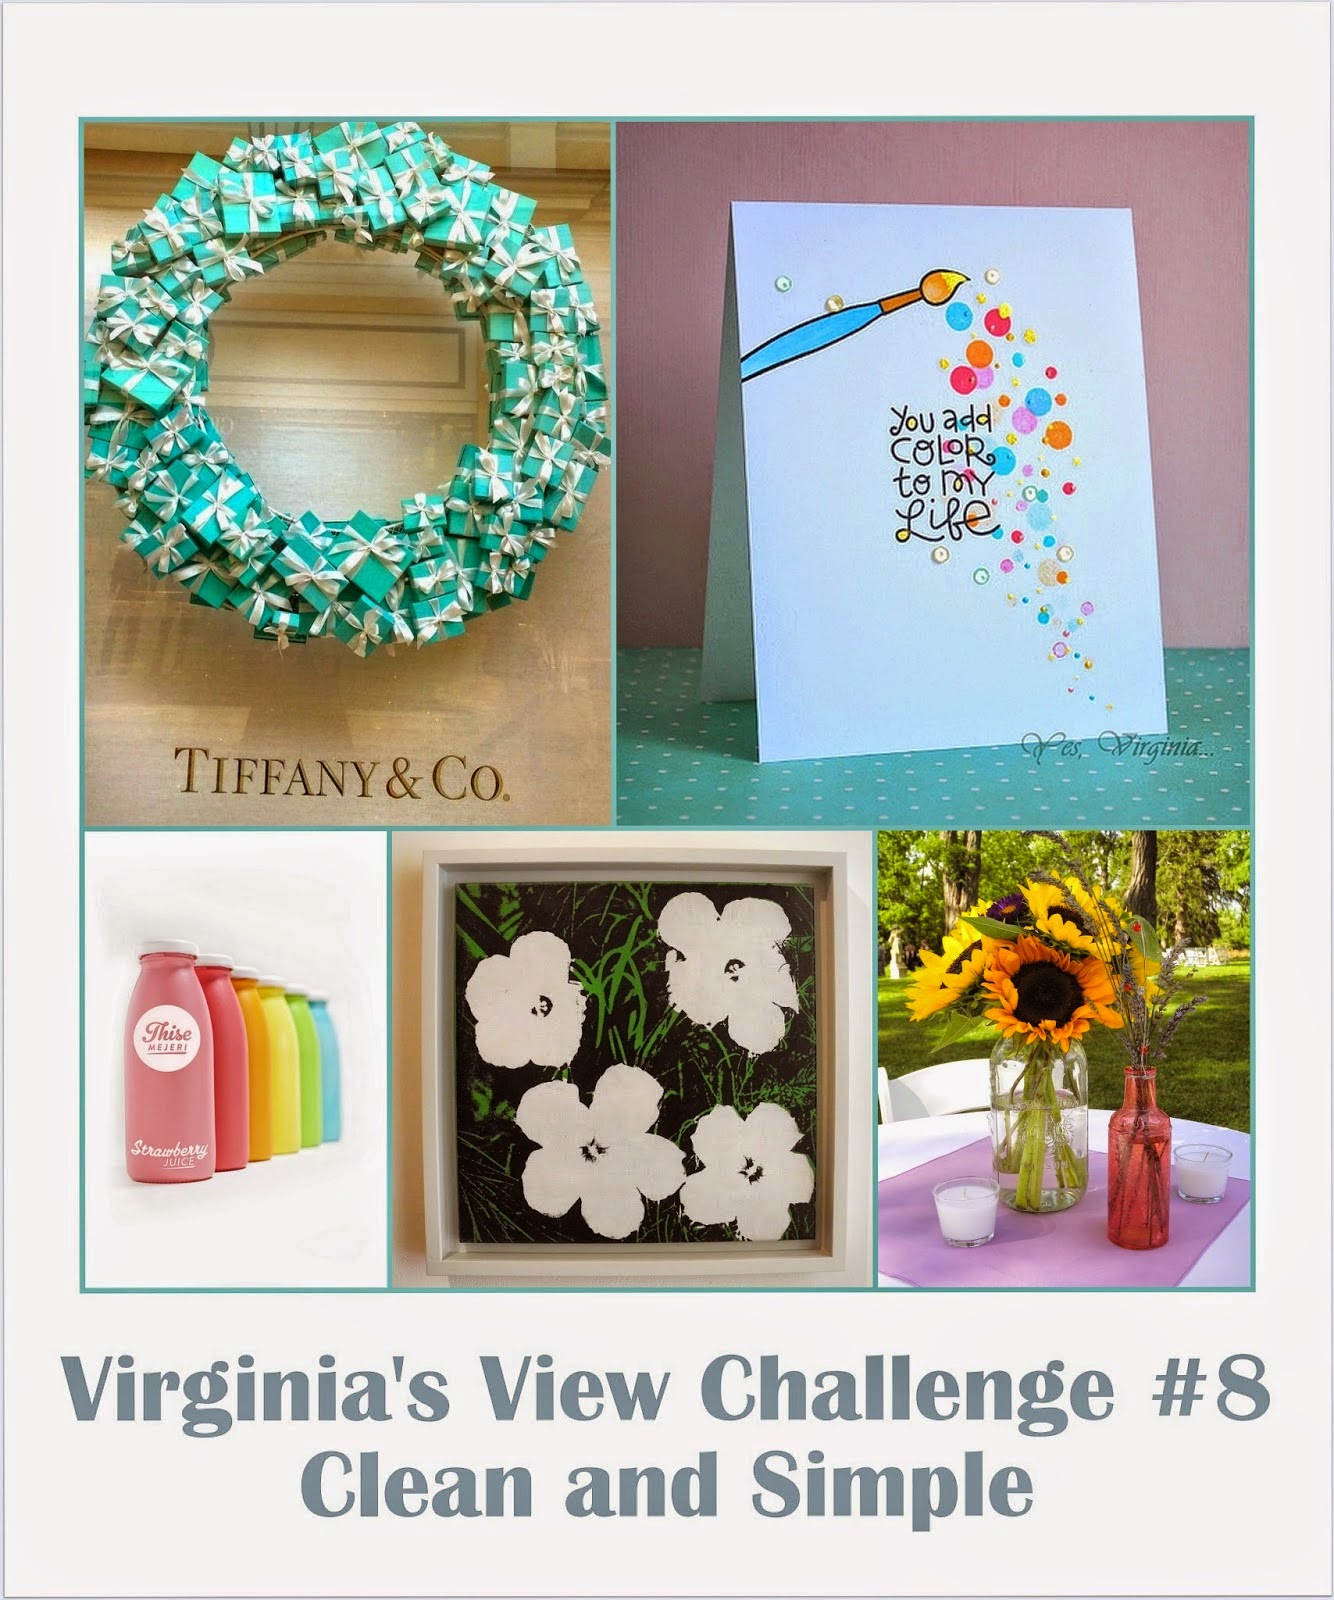 http://virginiasviewchallenge.blogspot.ca/2014/10/virginias-view-challenge-8.html